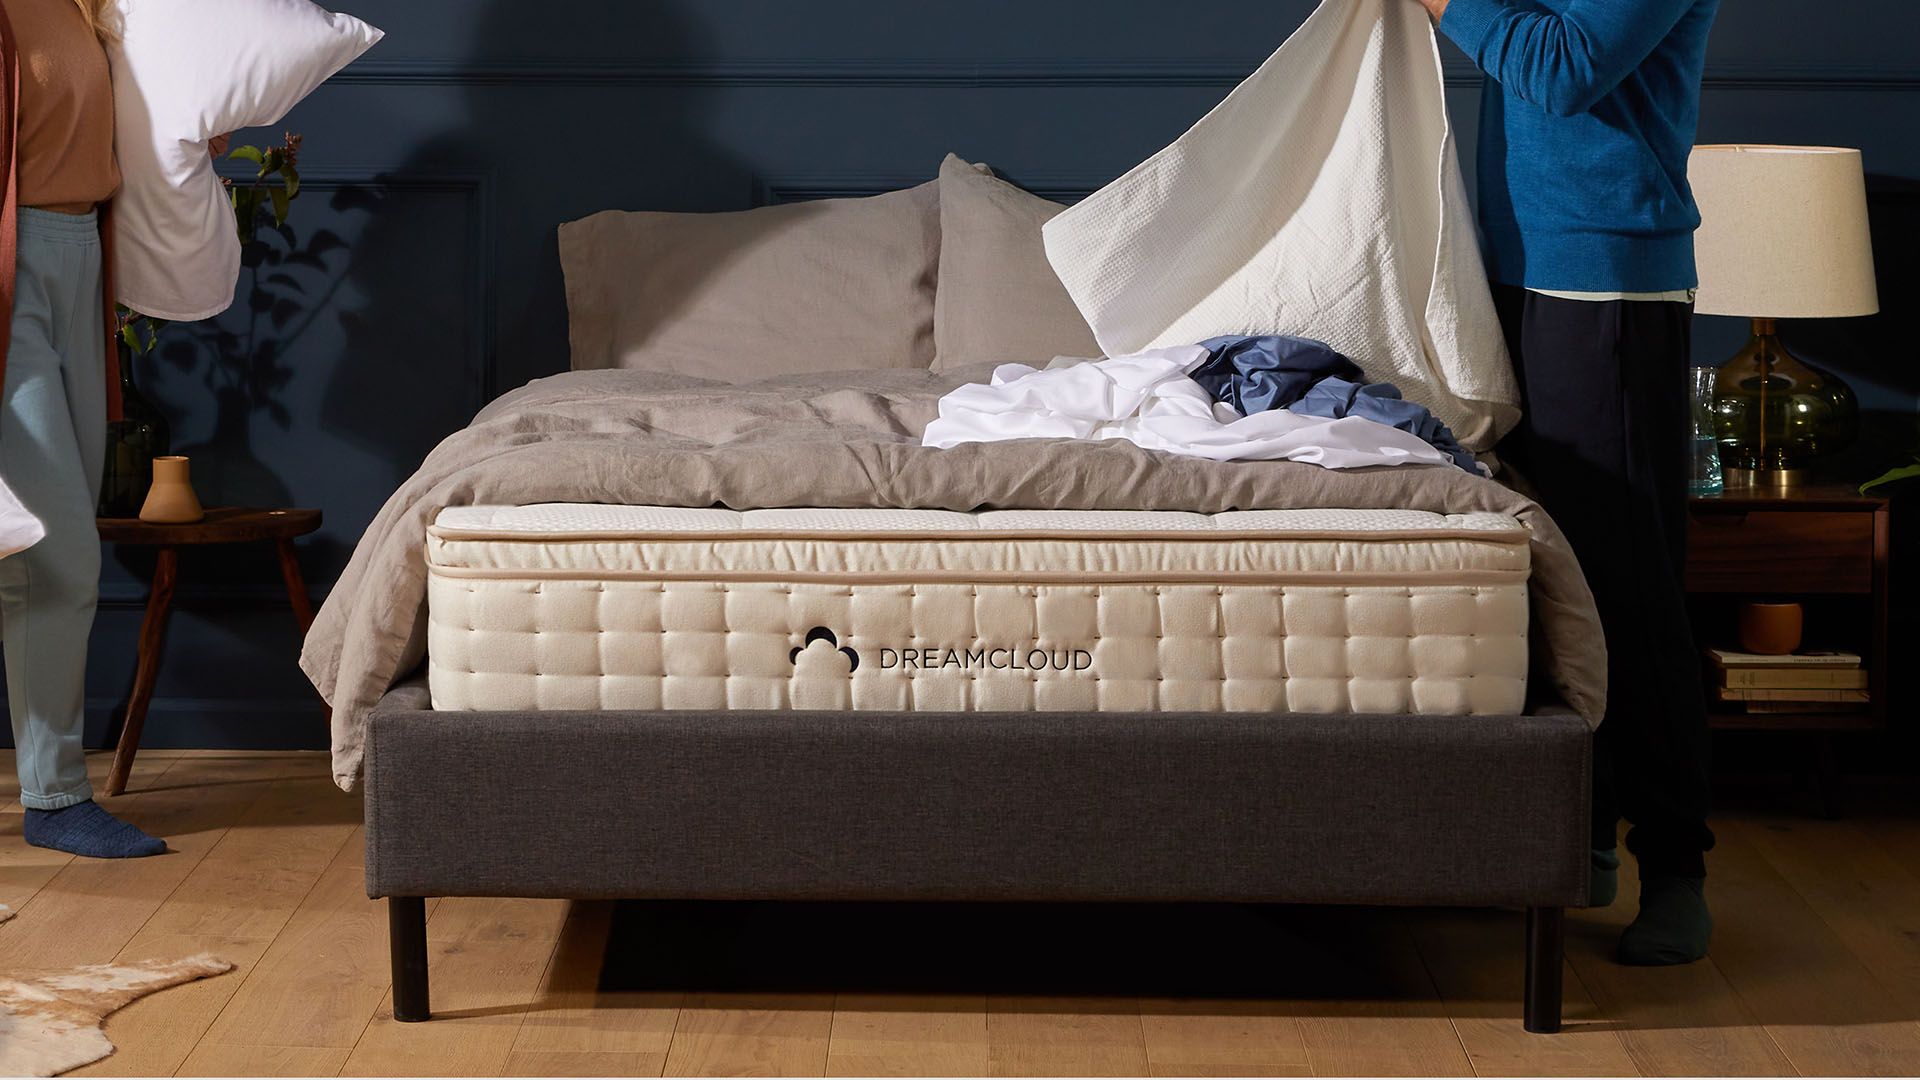 dreamcloud luxury hybrid mattress uk review